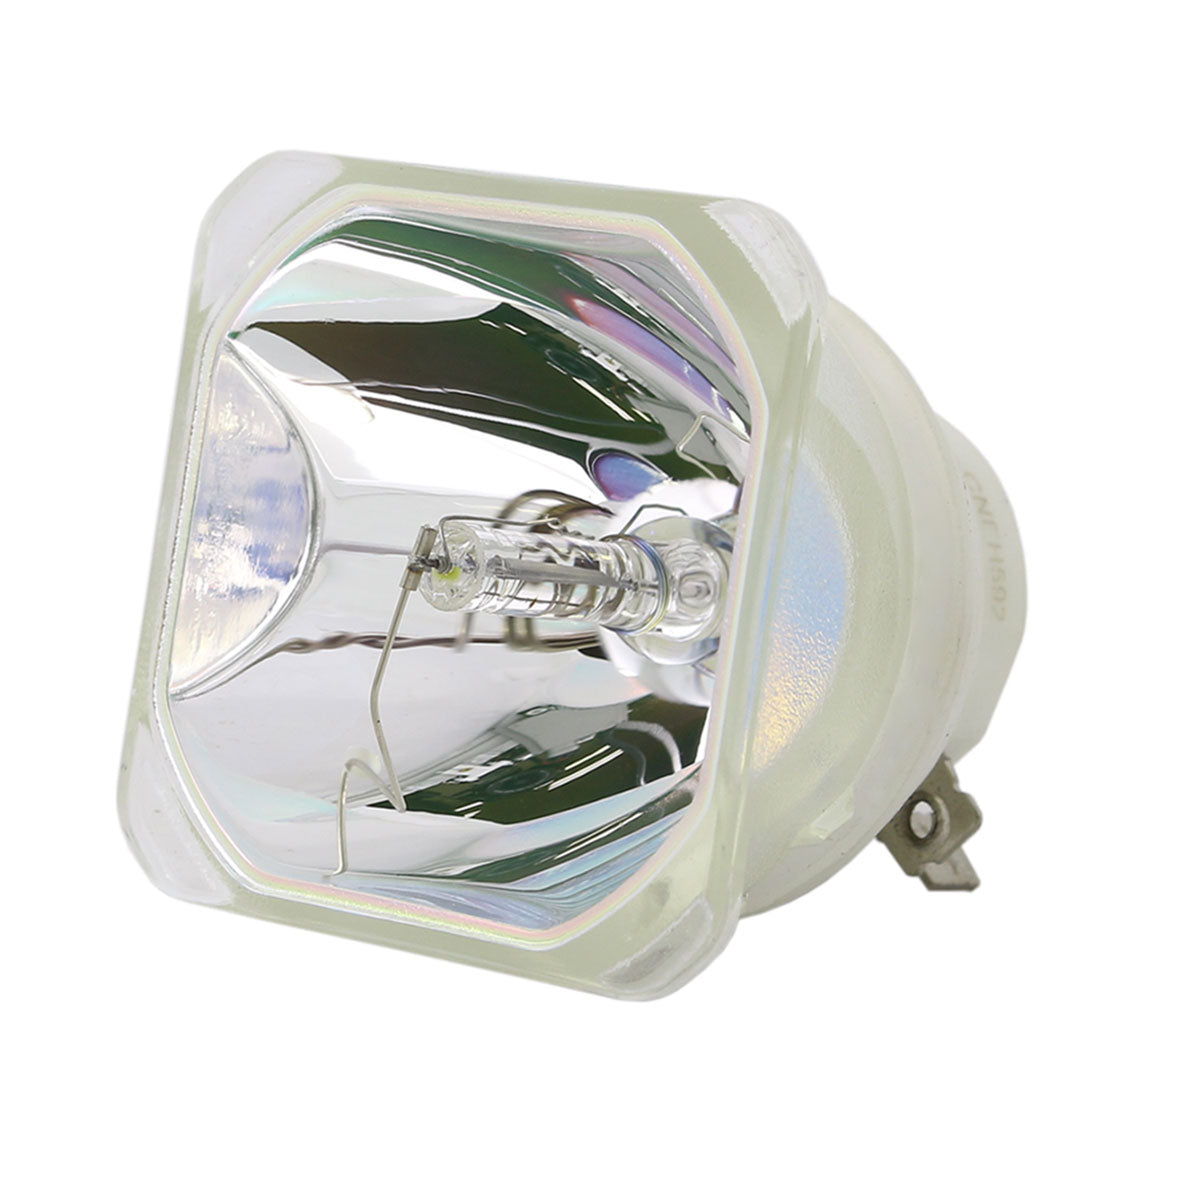 Boxlight X28NST Ushio Projector Bare Lamp